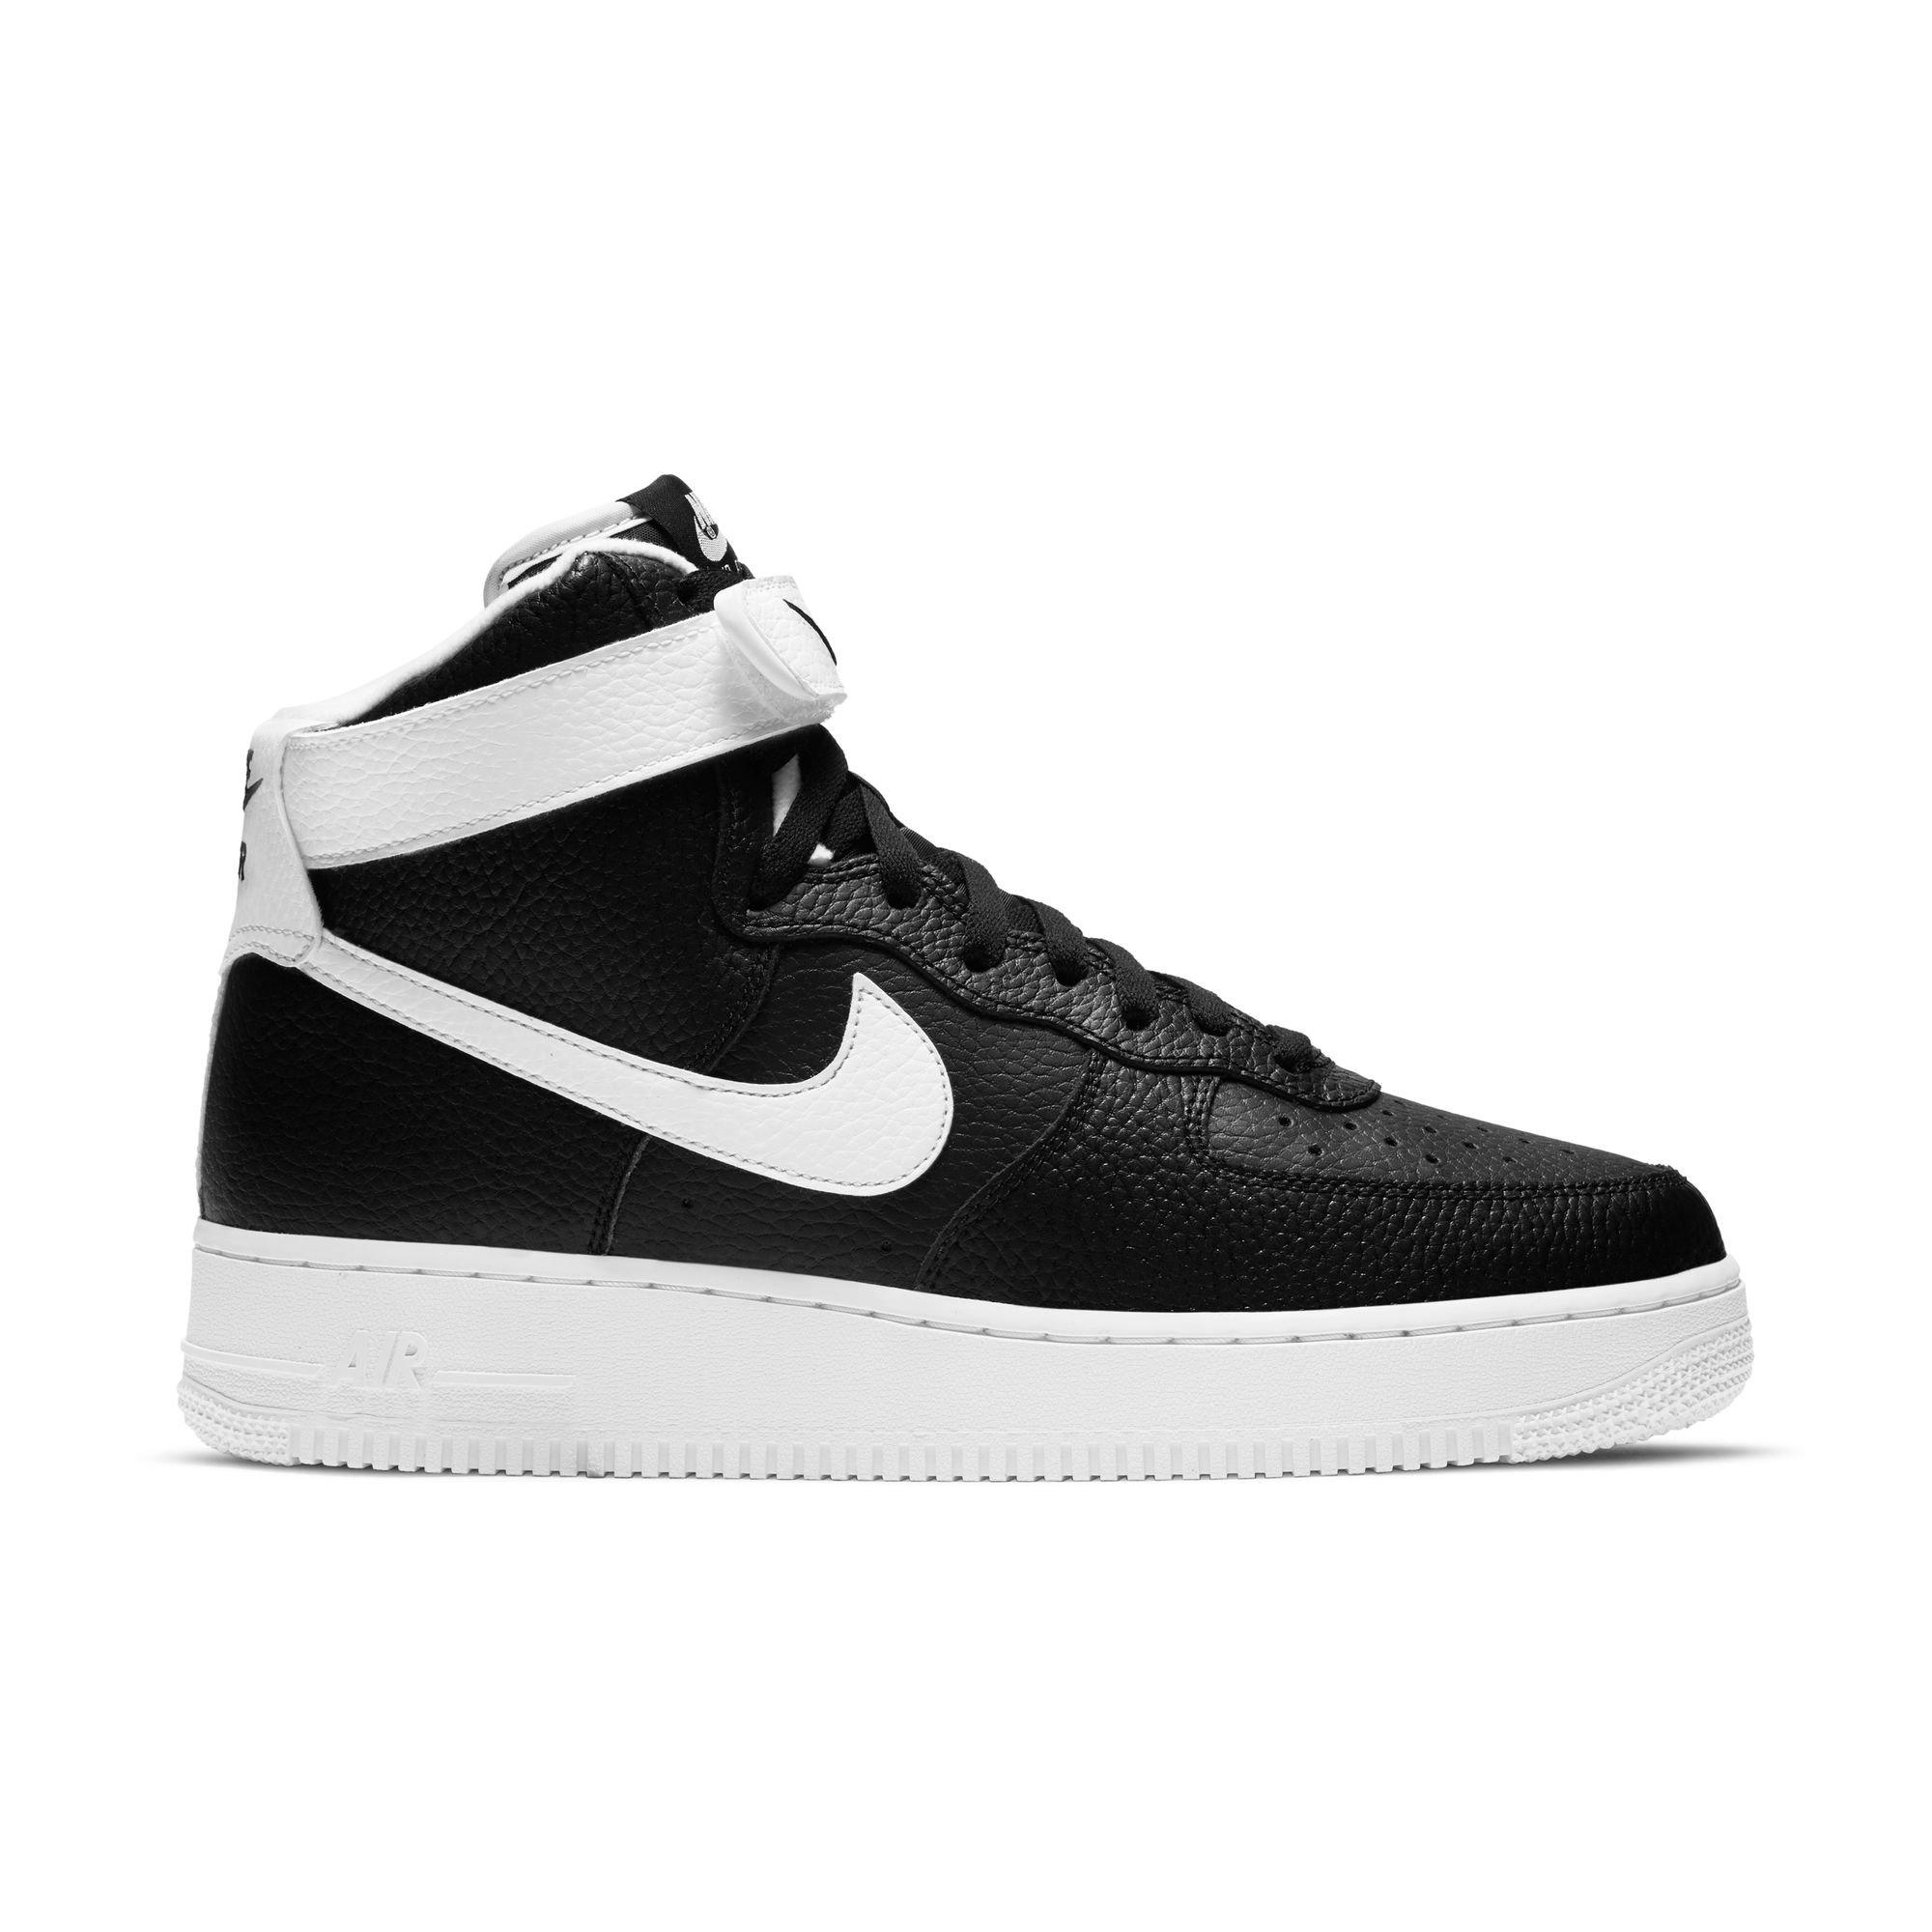 Nike Air Force '07 High "Black/White" Men's Shoe